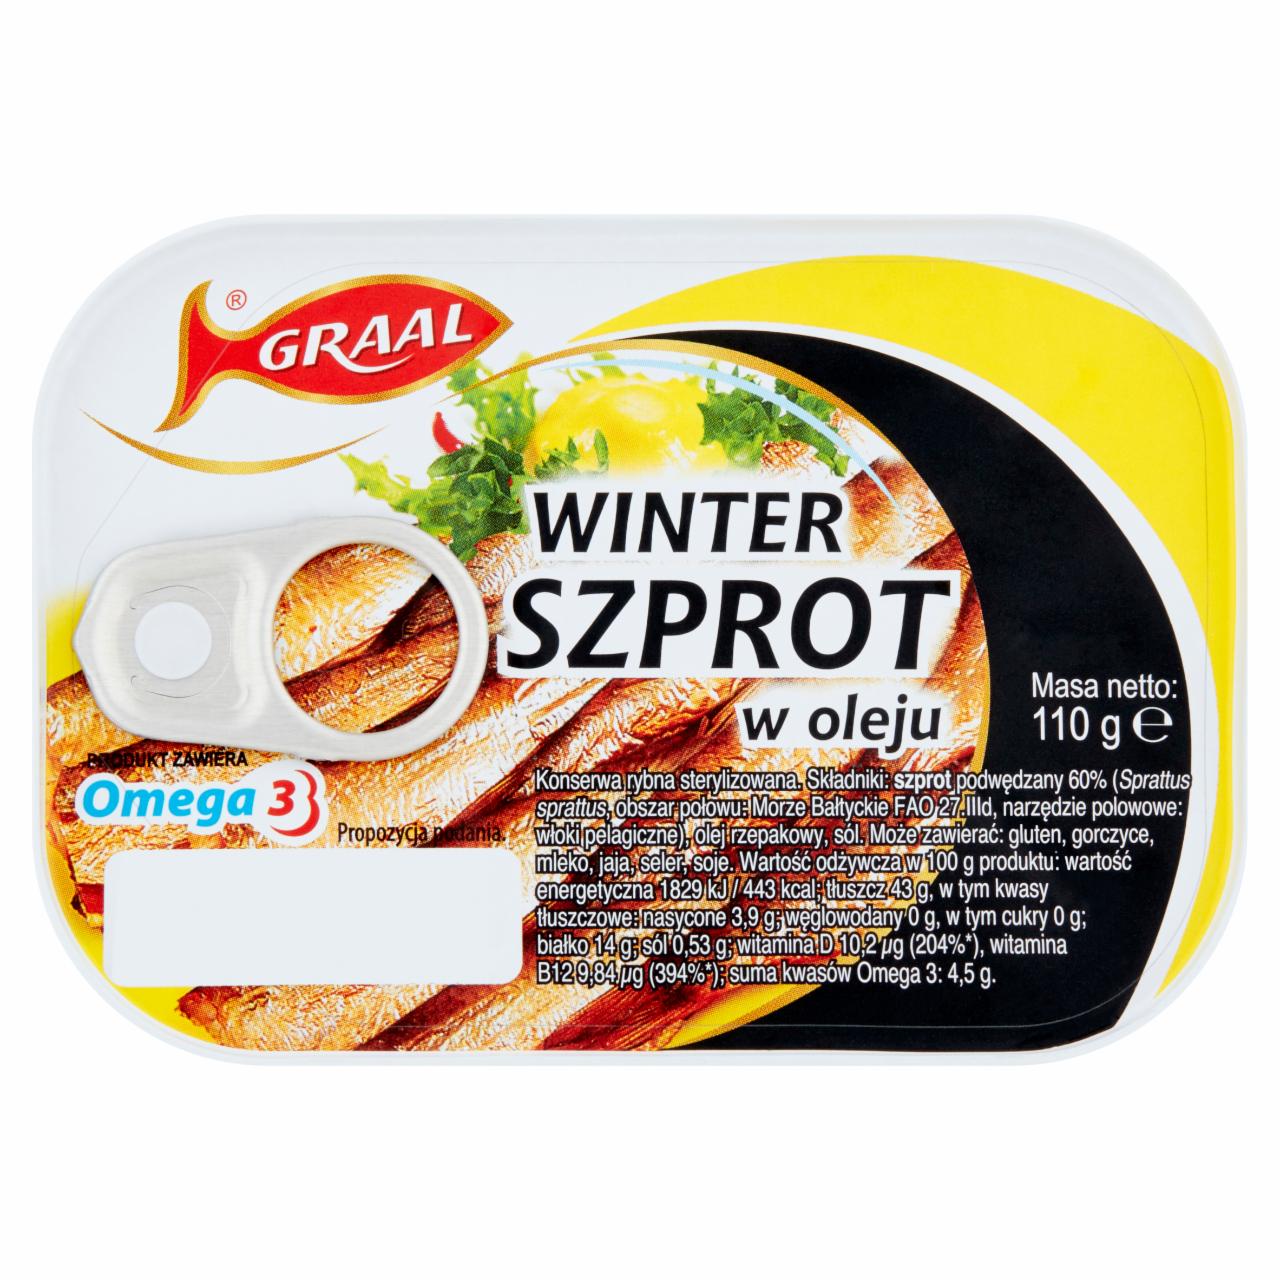 Zdjęcia - Graal Winter Szprot w oleju 110 g